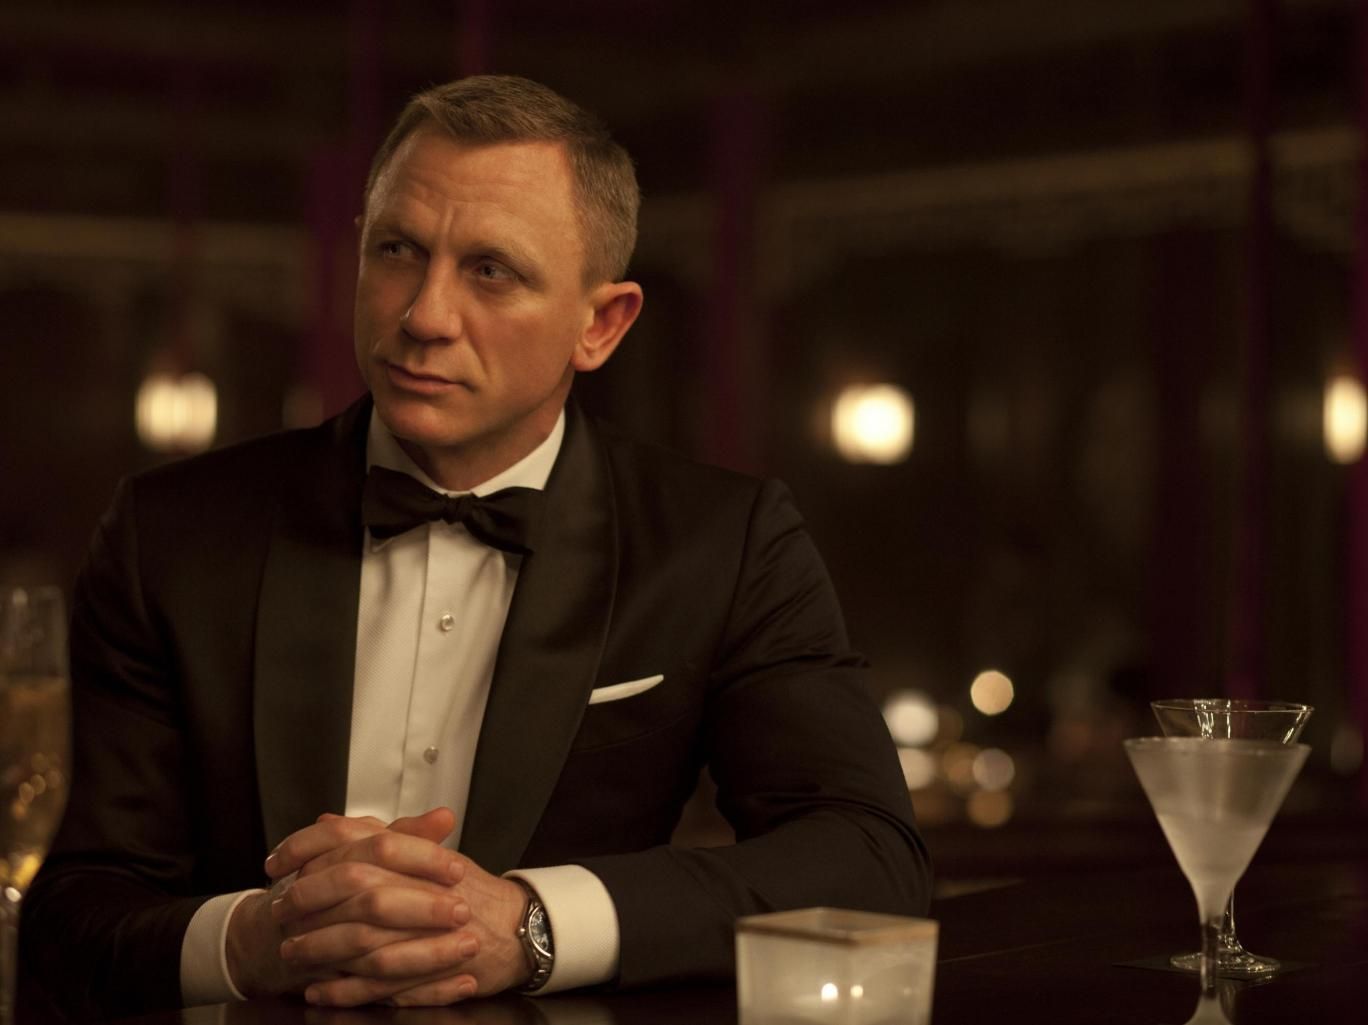 James Bond wallpaper, Movie, HQ James Bond pictureK Wallpaper 2019